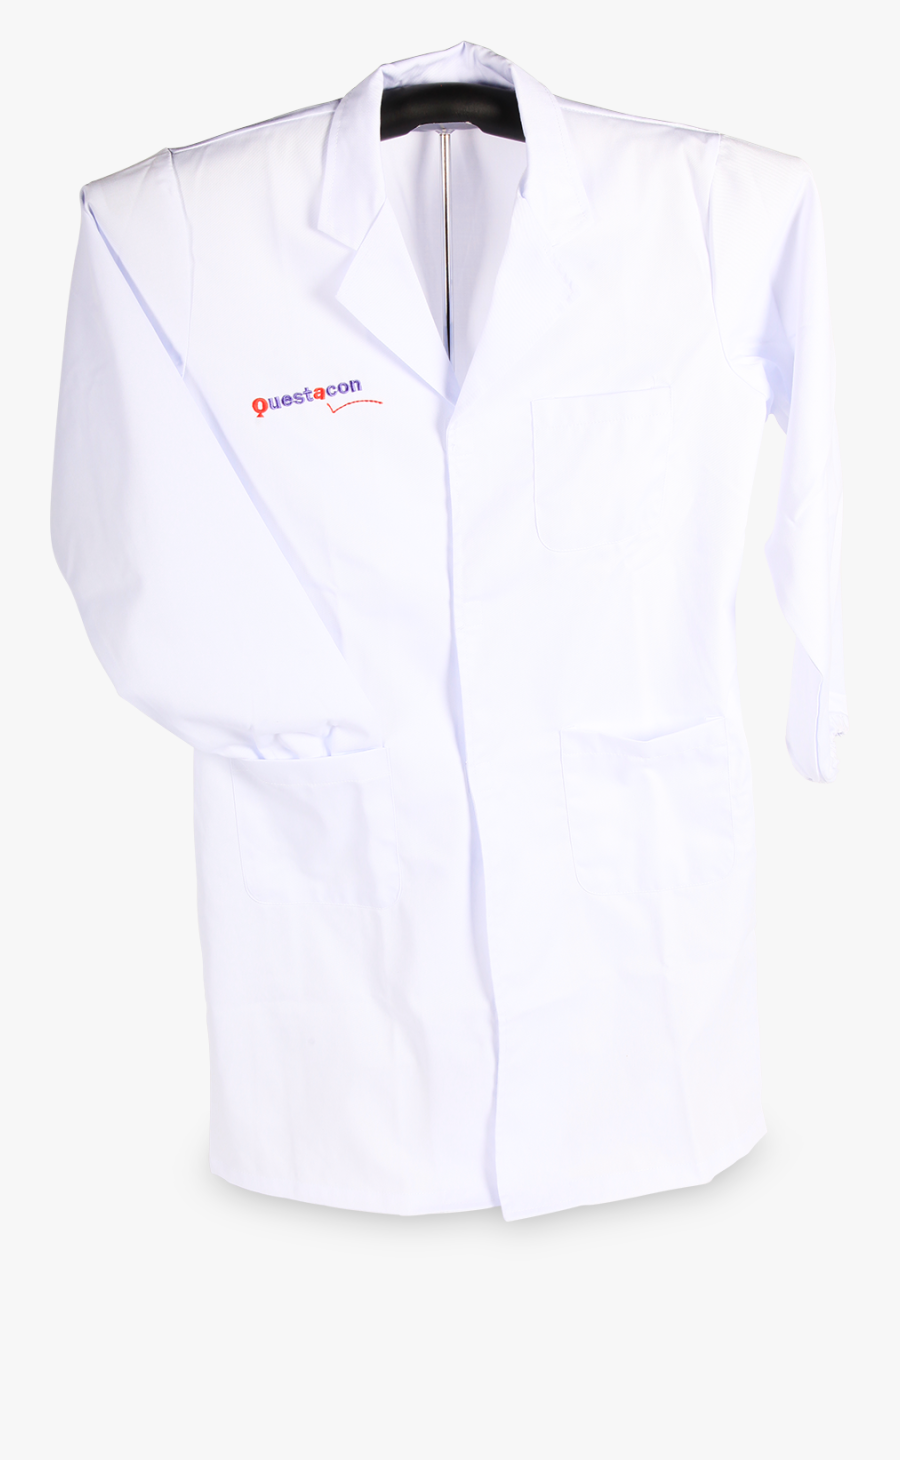 Lab Coat Png - Supreme Lab Coat, Transparent Clipart